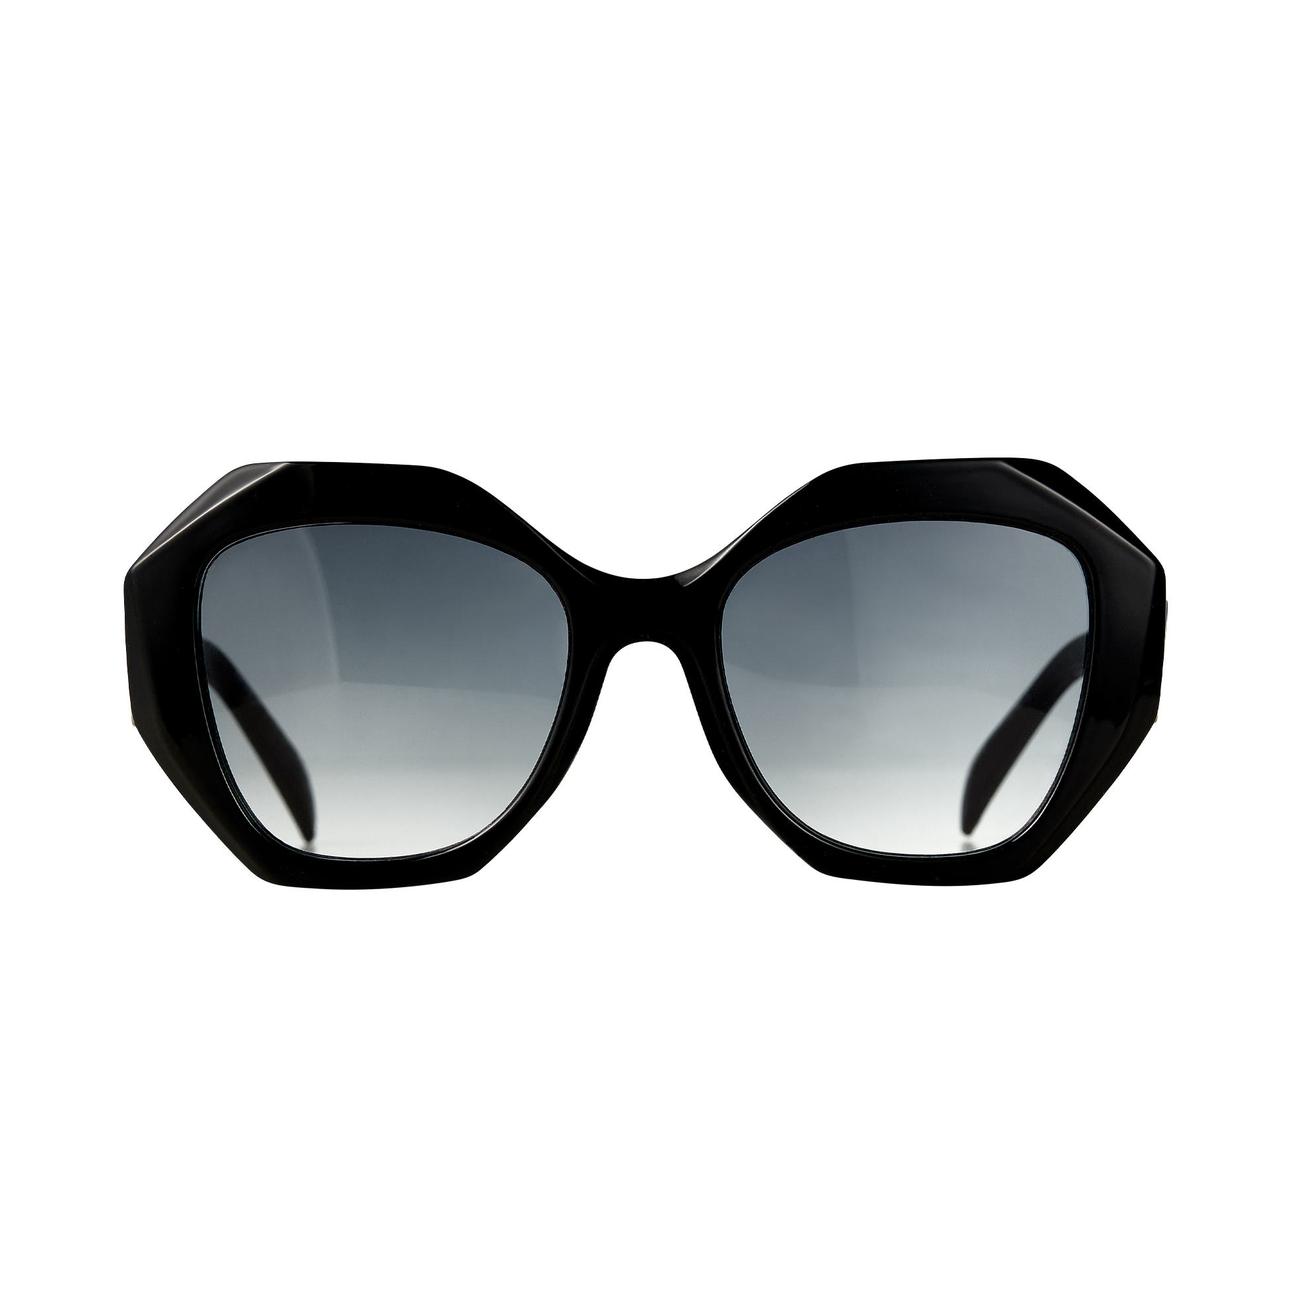 Oferta de Gafas de Sol Crush On por 12,99€ en Oriflame